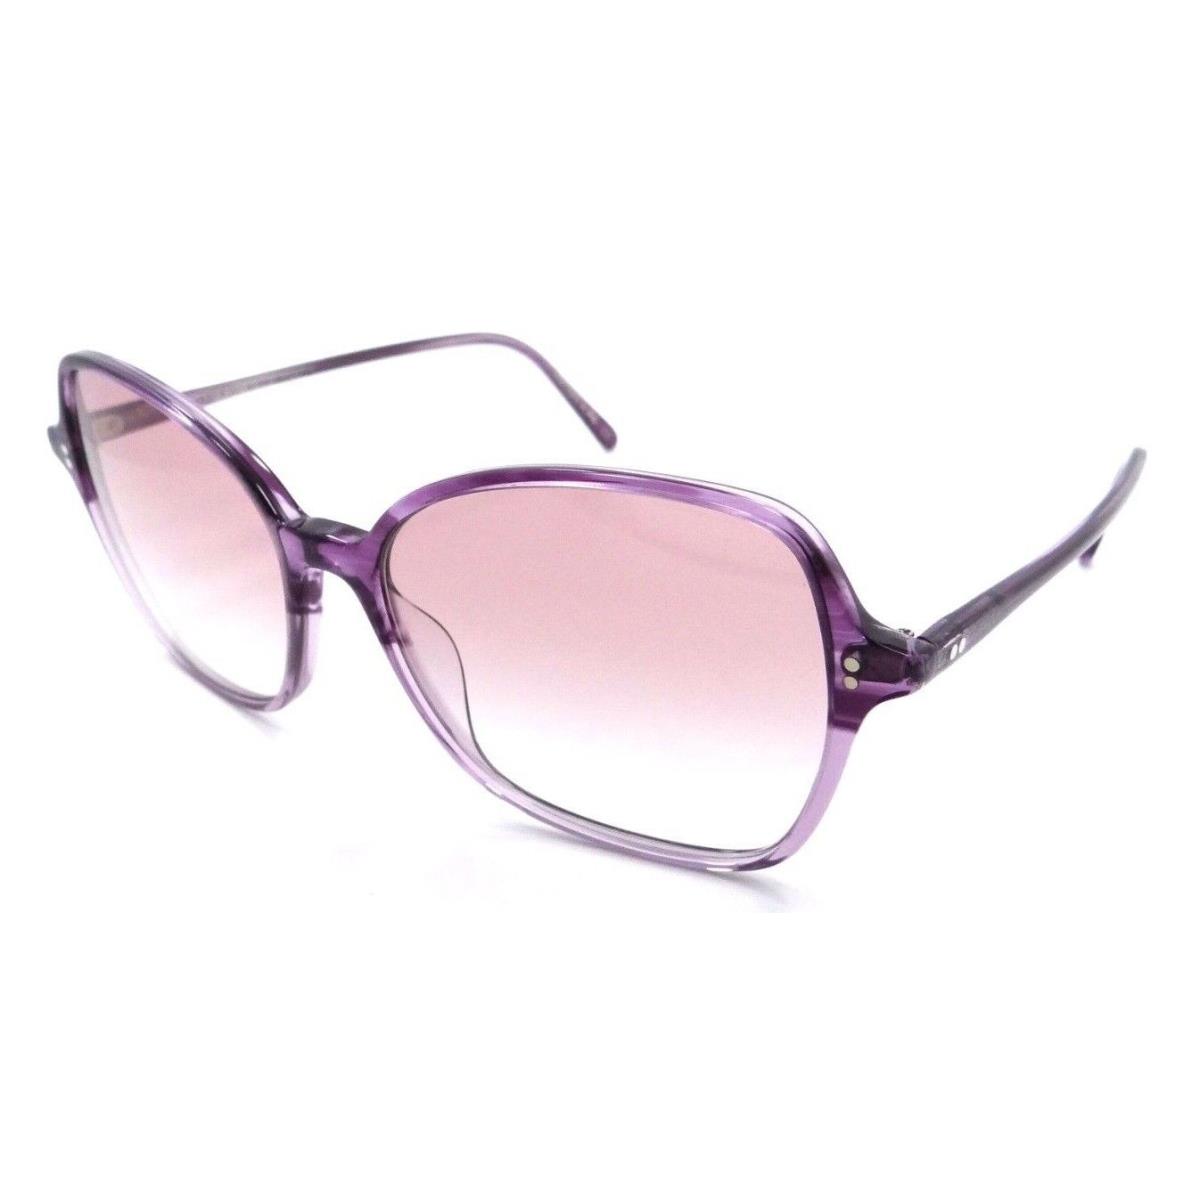 Oliver Peoples Sunglasses 5447U 1691 57-16-145 Willeta Jacaranda Grad/pink Shade